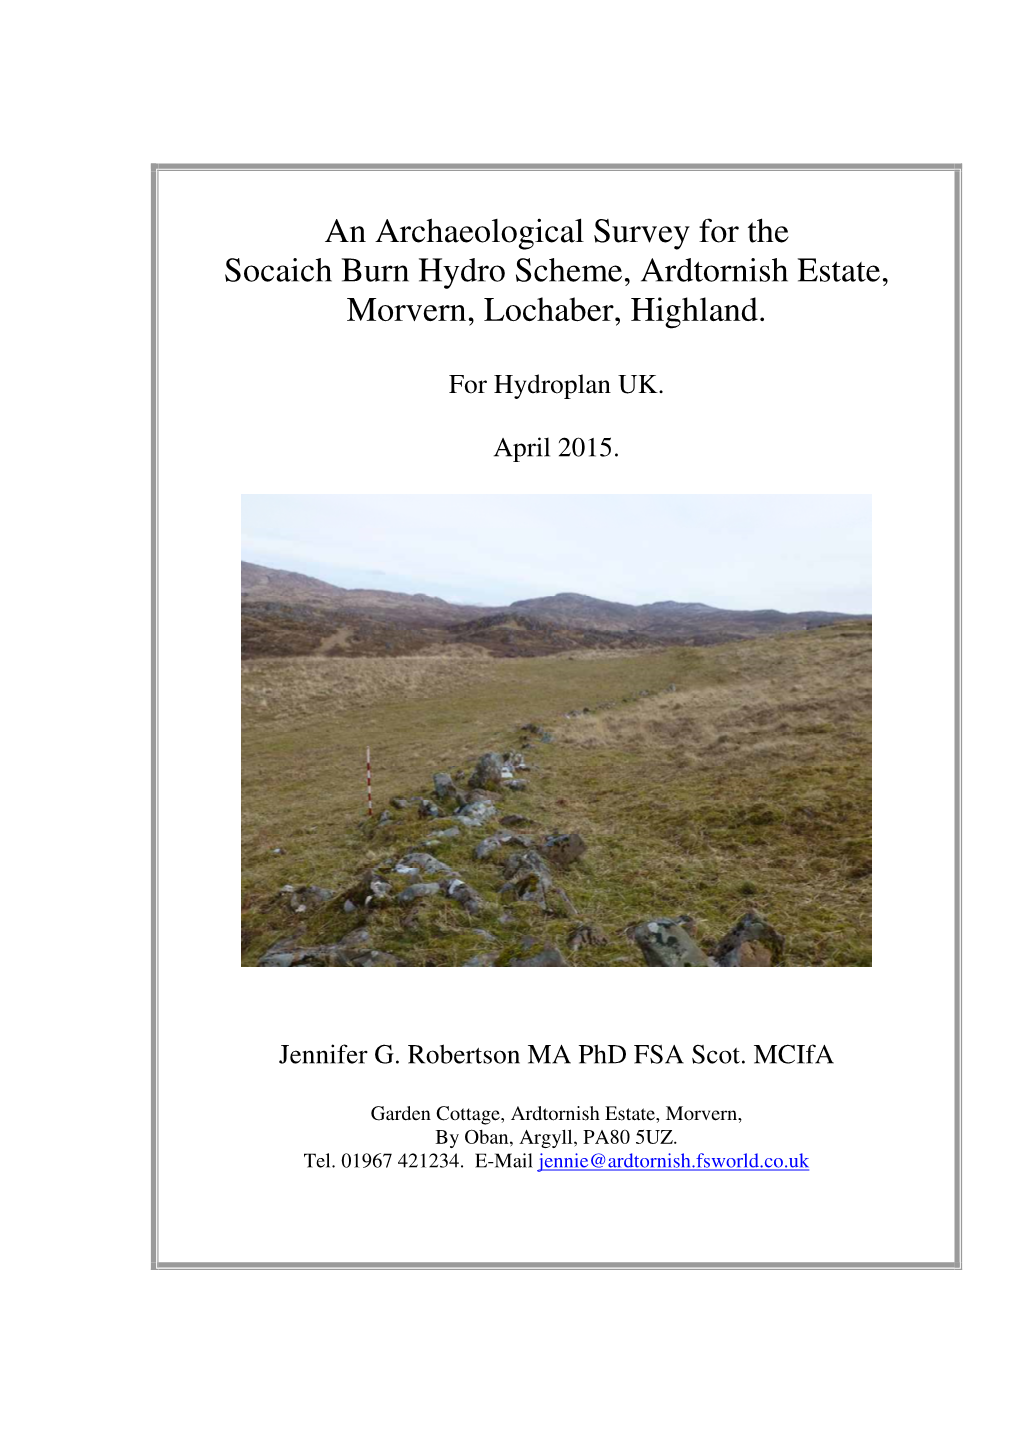 An Archaeological Survey for the Socaich Burn Hydro Scheme, Ardtornish Estate, Morvern, Lochaber, Highland